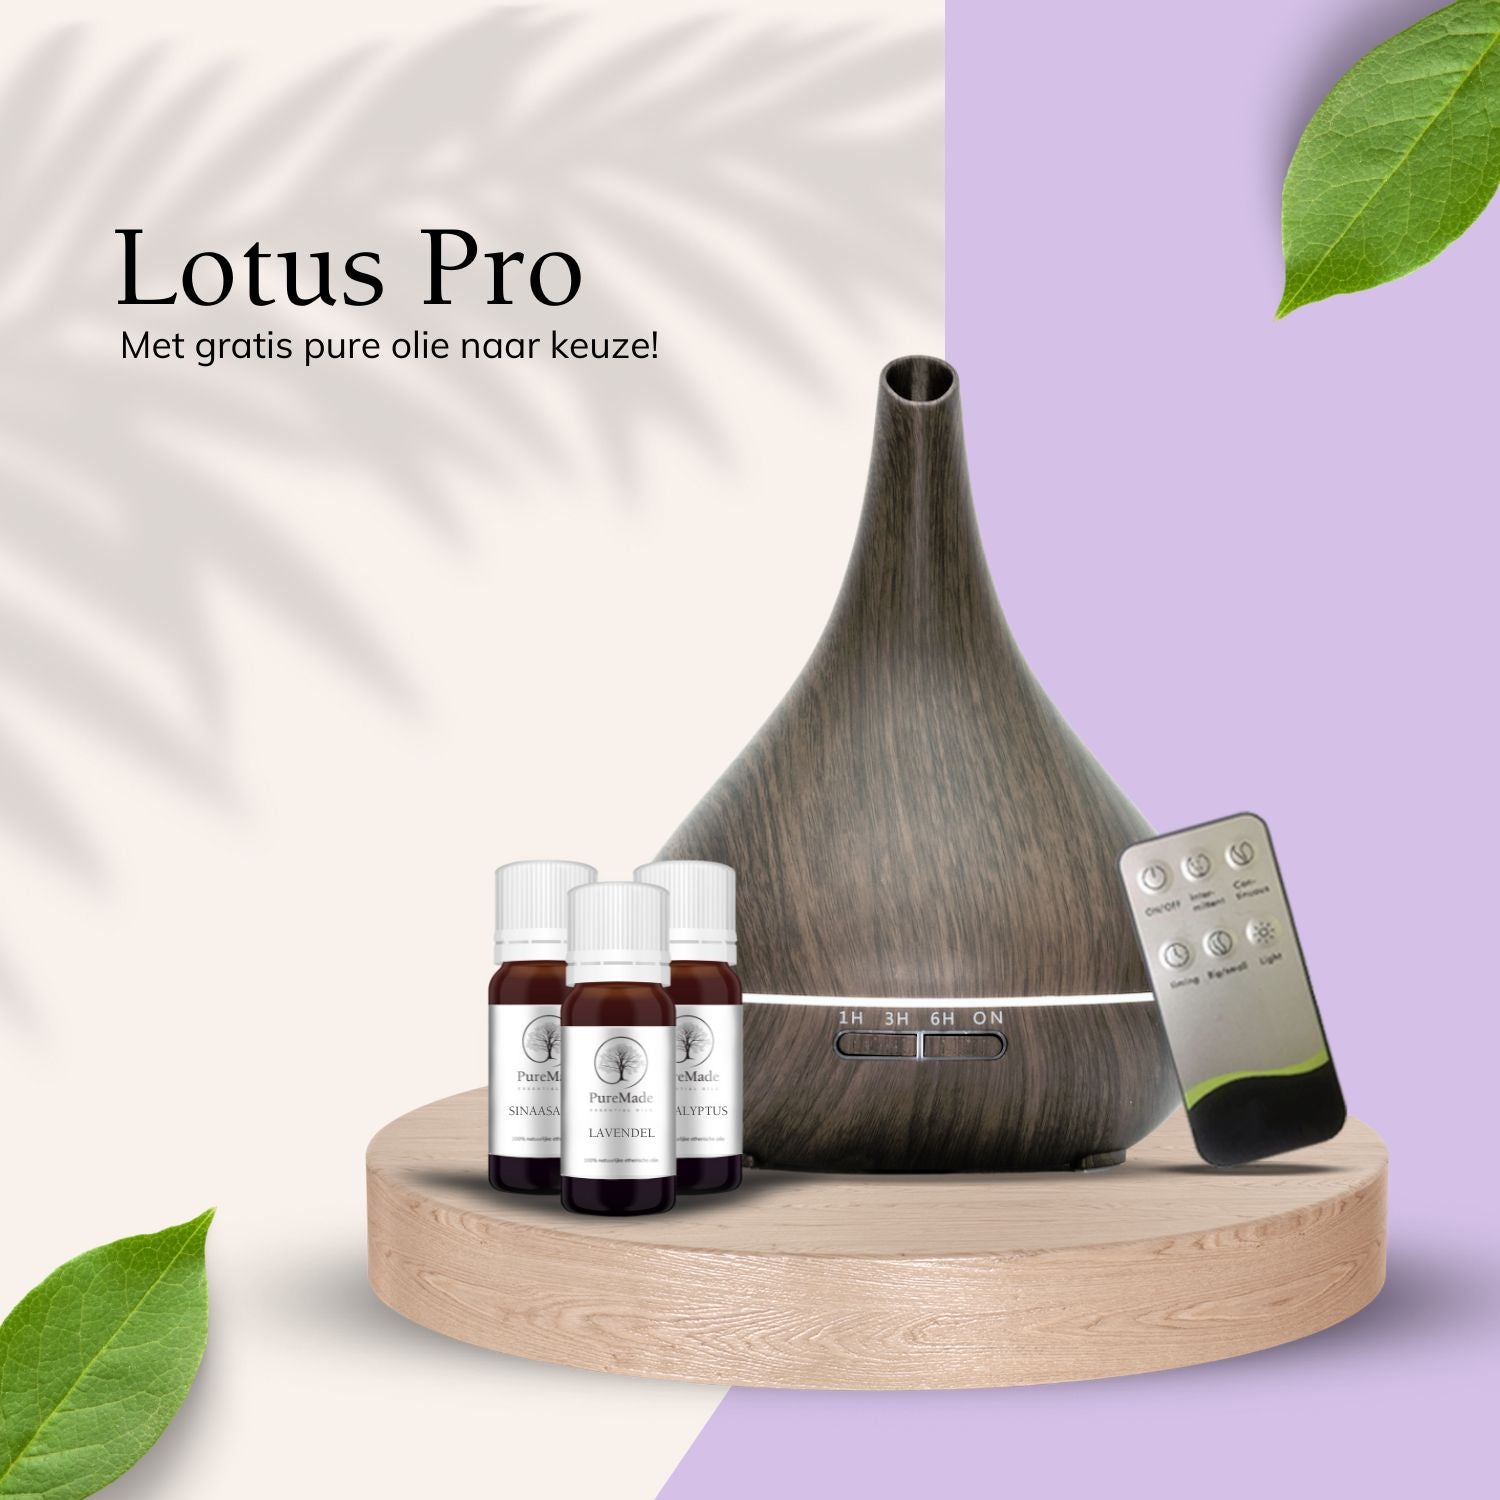 Lotus Pro Dark Wood - Aroma Diffuser